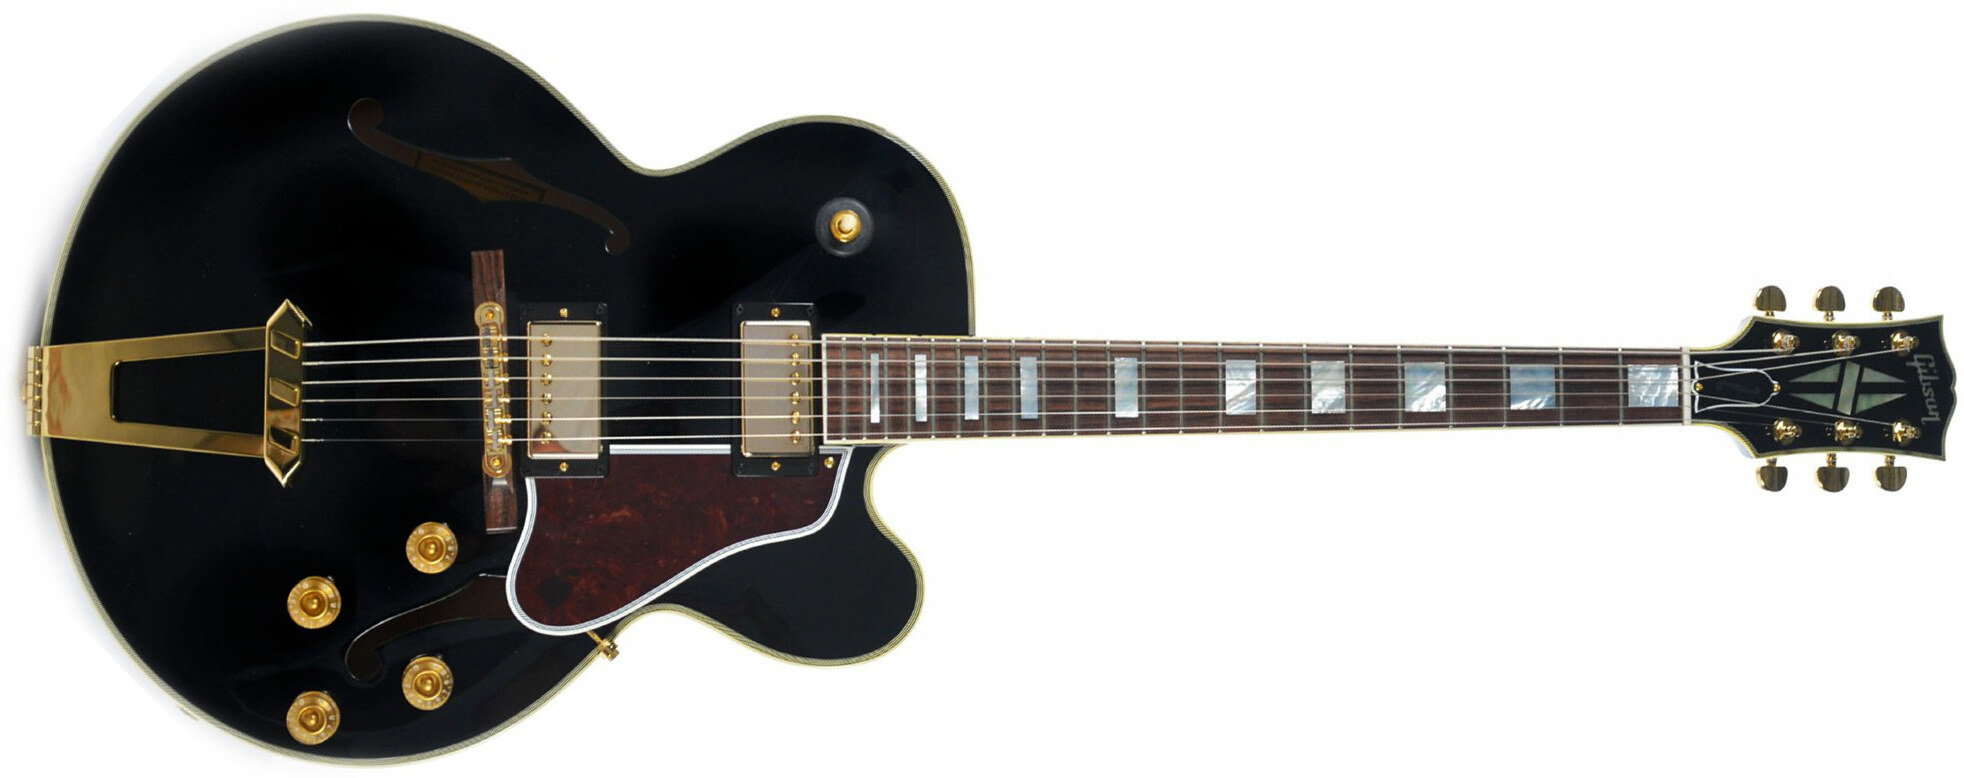 Gibson Es-275 Custom 2018 Ltd - Ebony - Hollow-body electric guitar - Main picture